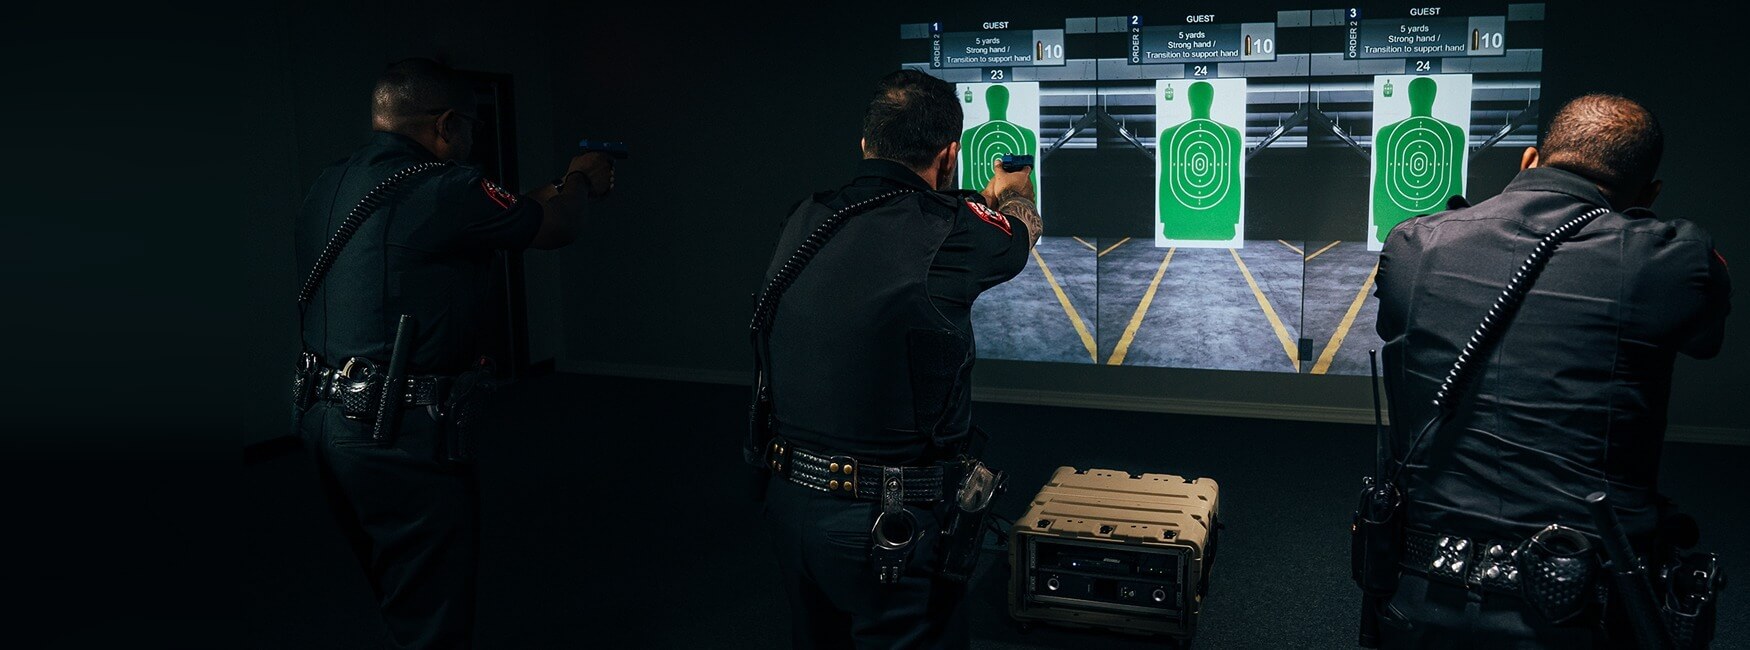 police on simulator